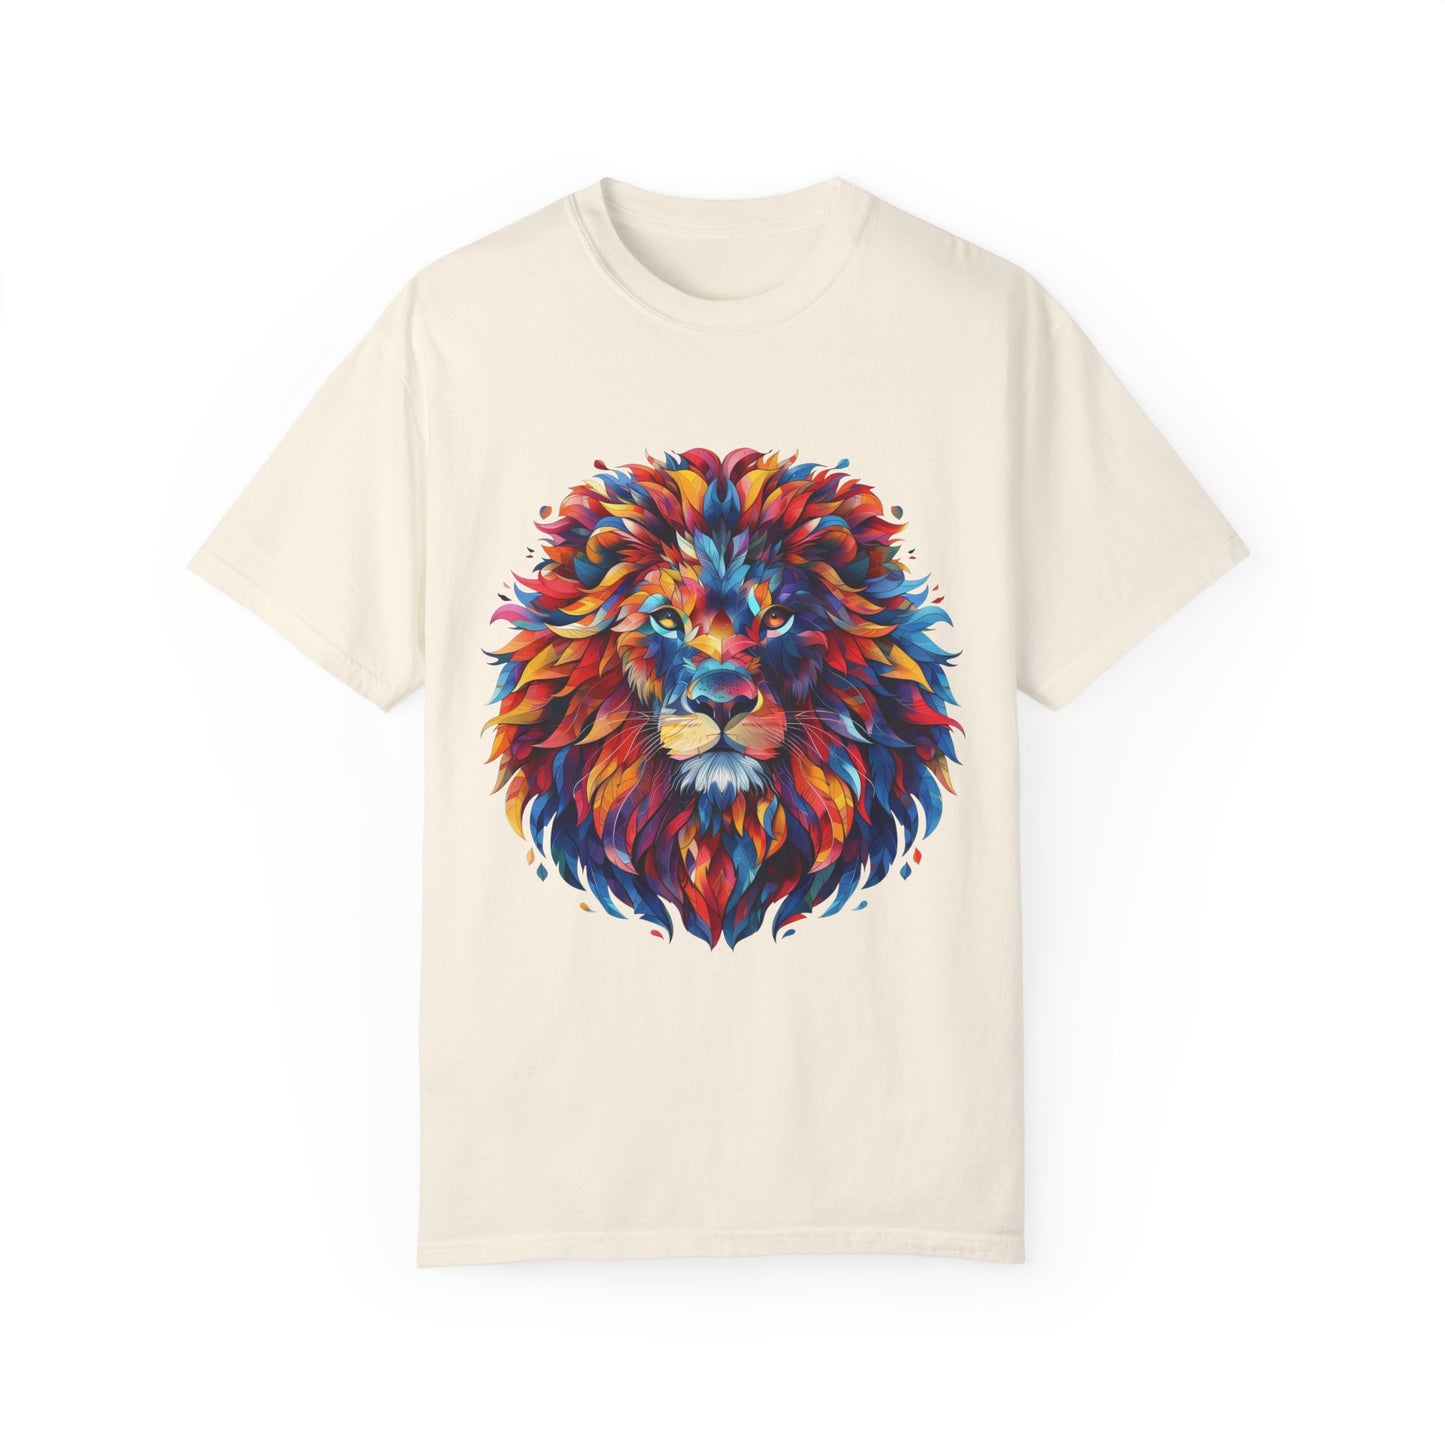 Lion Head Cool Graphic Design Novelty Unisex Garment-dyed T-shirt Cotton Funny Humorous Graphic Soft Premium Unisex Men Women Ivory T-shirt Birthday Gift-10